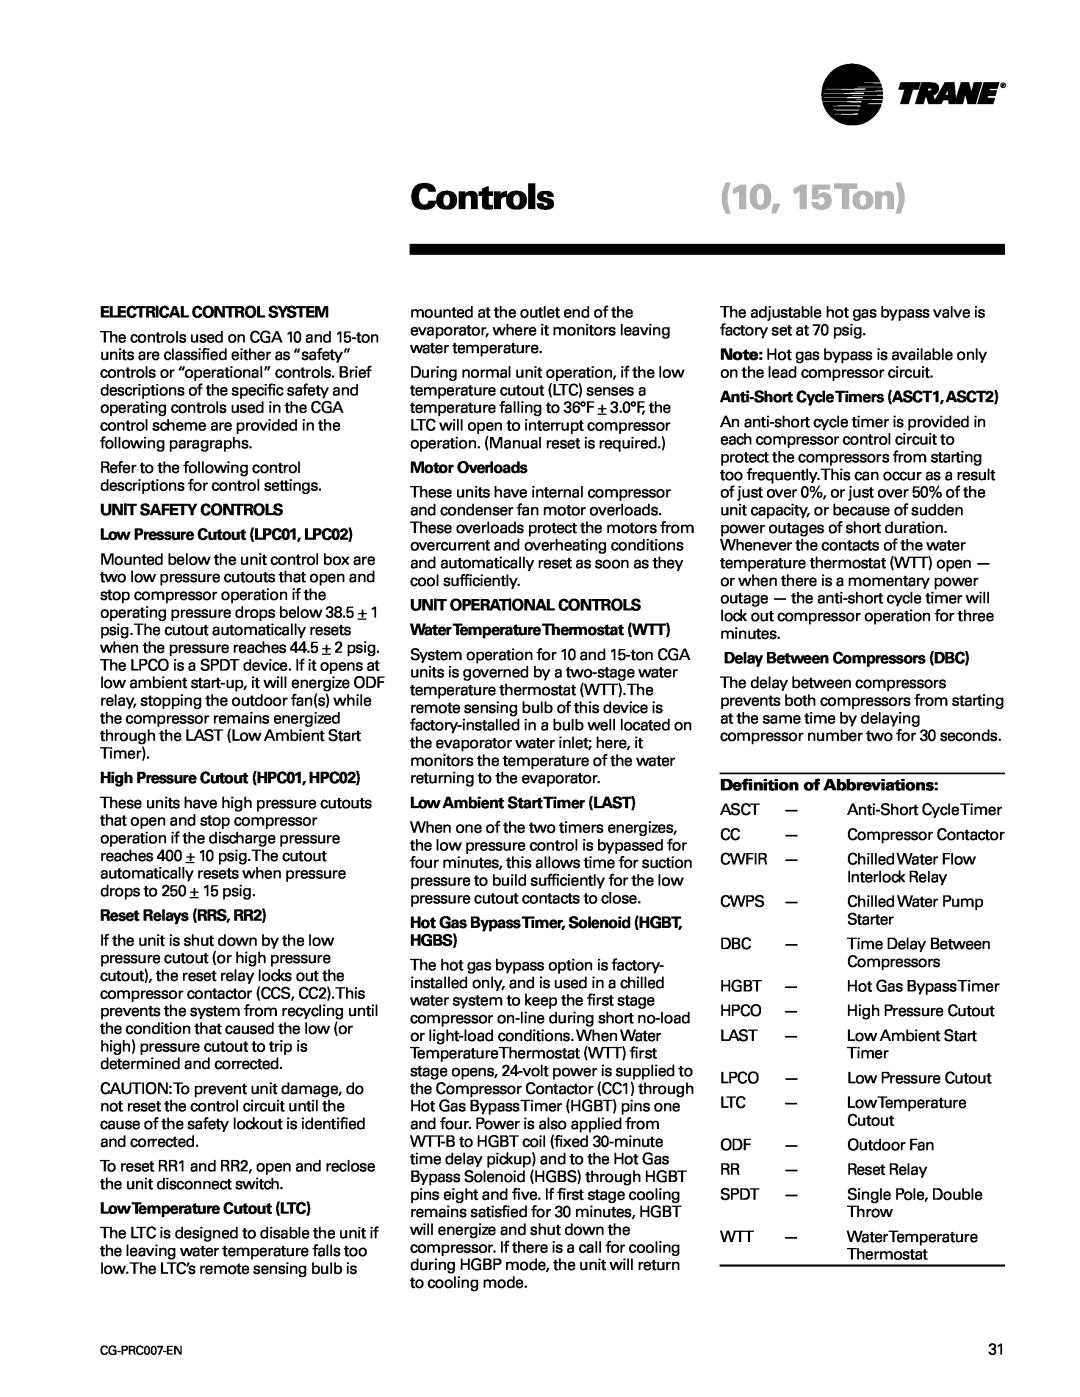 Trane CG-PRC007-EN manual 10, 15Ton, Electrical Control System, Unit Safety Controls, Low Pressure Cutout LPC01, LPC02 